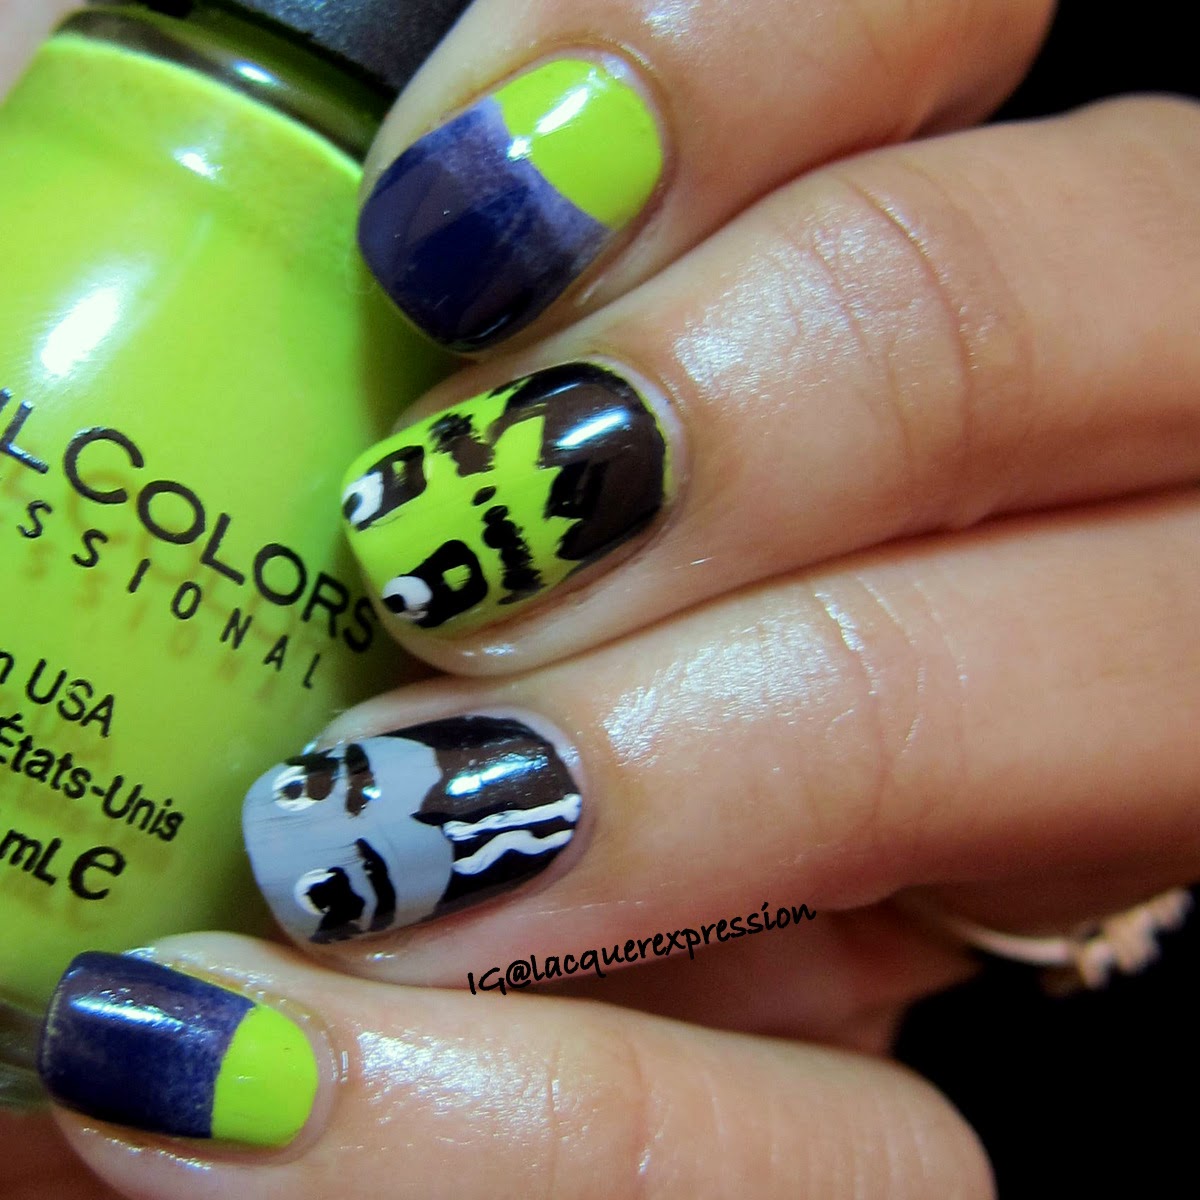 Frankenstein bride of Frankenstein Halloween nail art using Sinful Colors nail polish